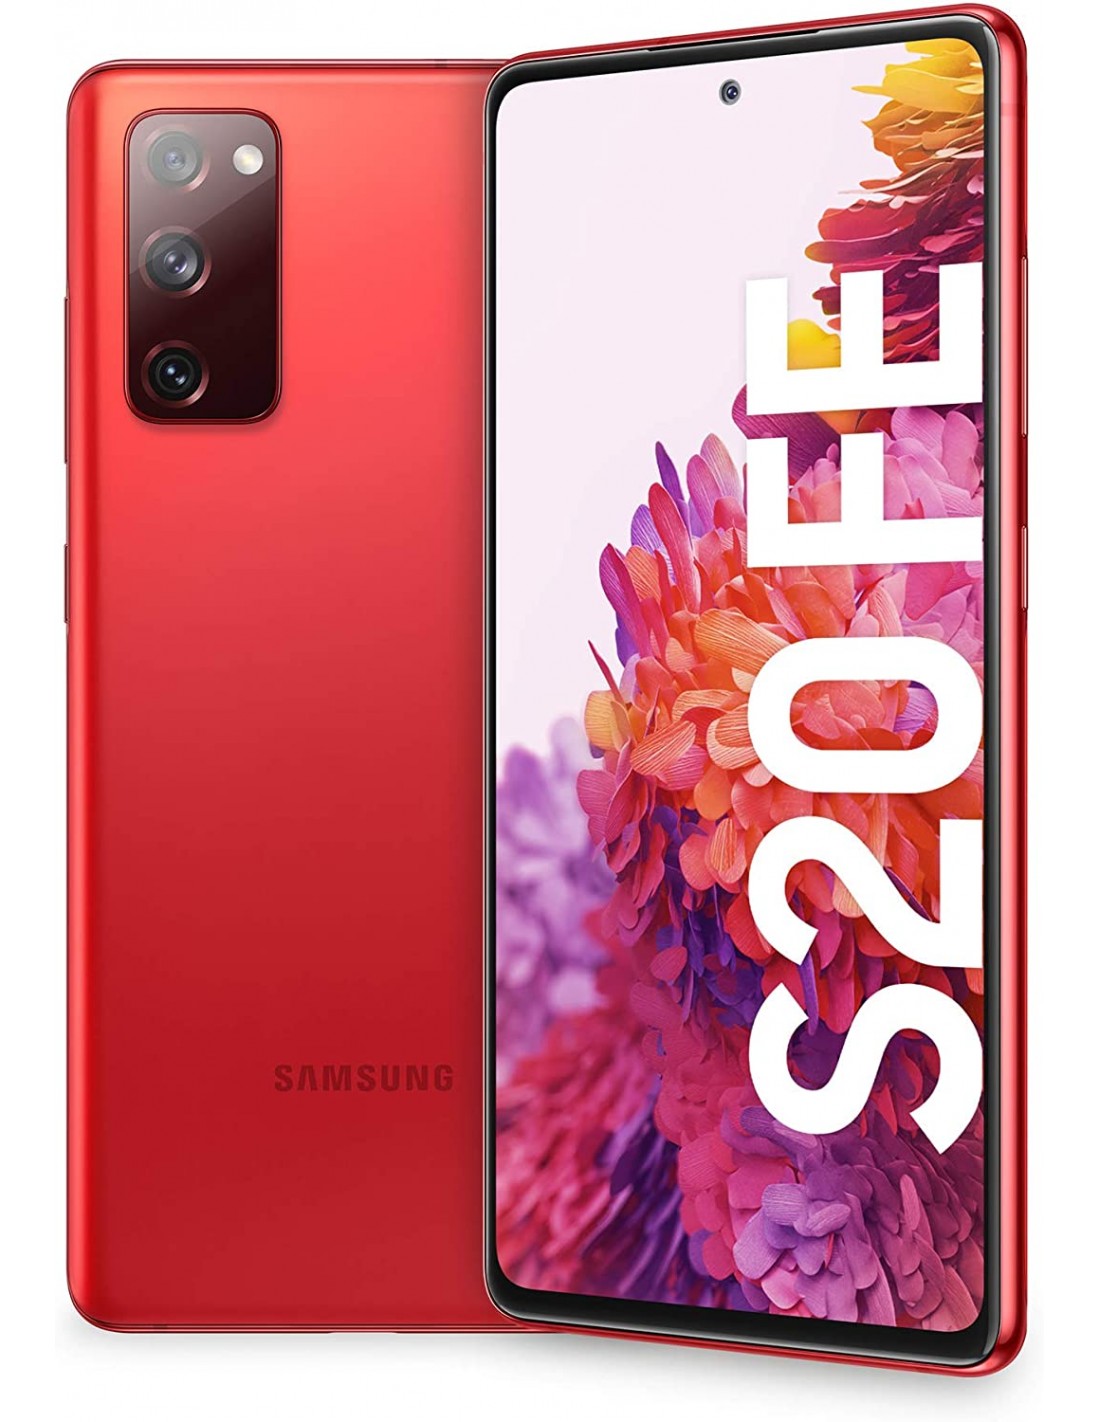 Samsung Galaxy S20 FE 5G SM-G781V 6GB+128GB Red (As New) *Free Shipping*